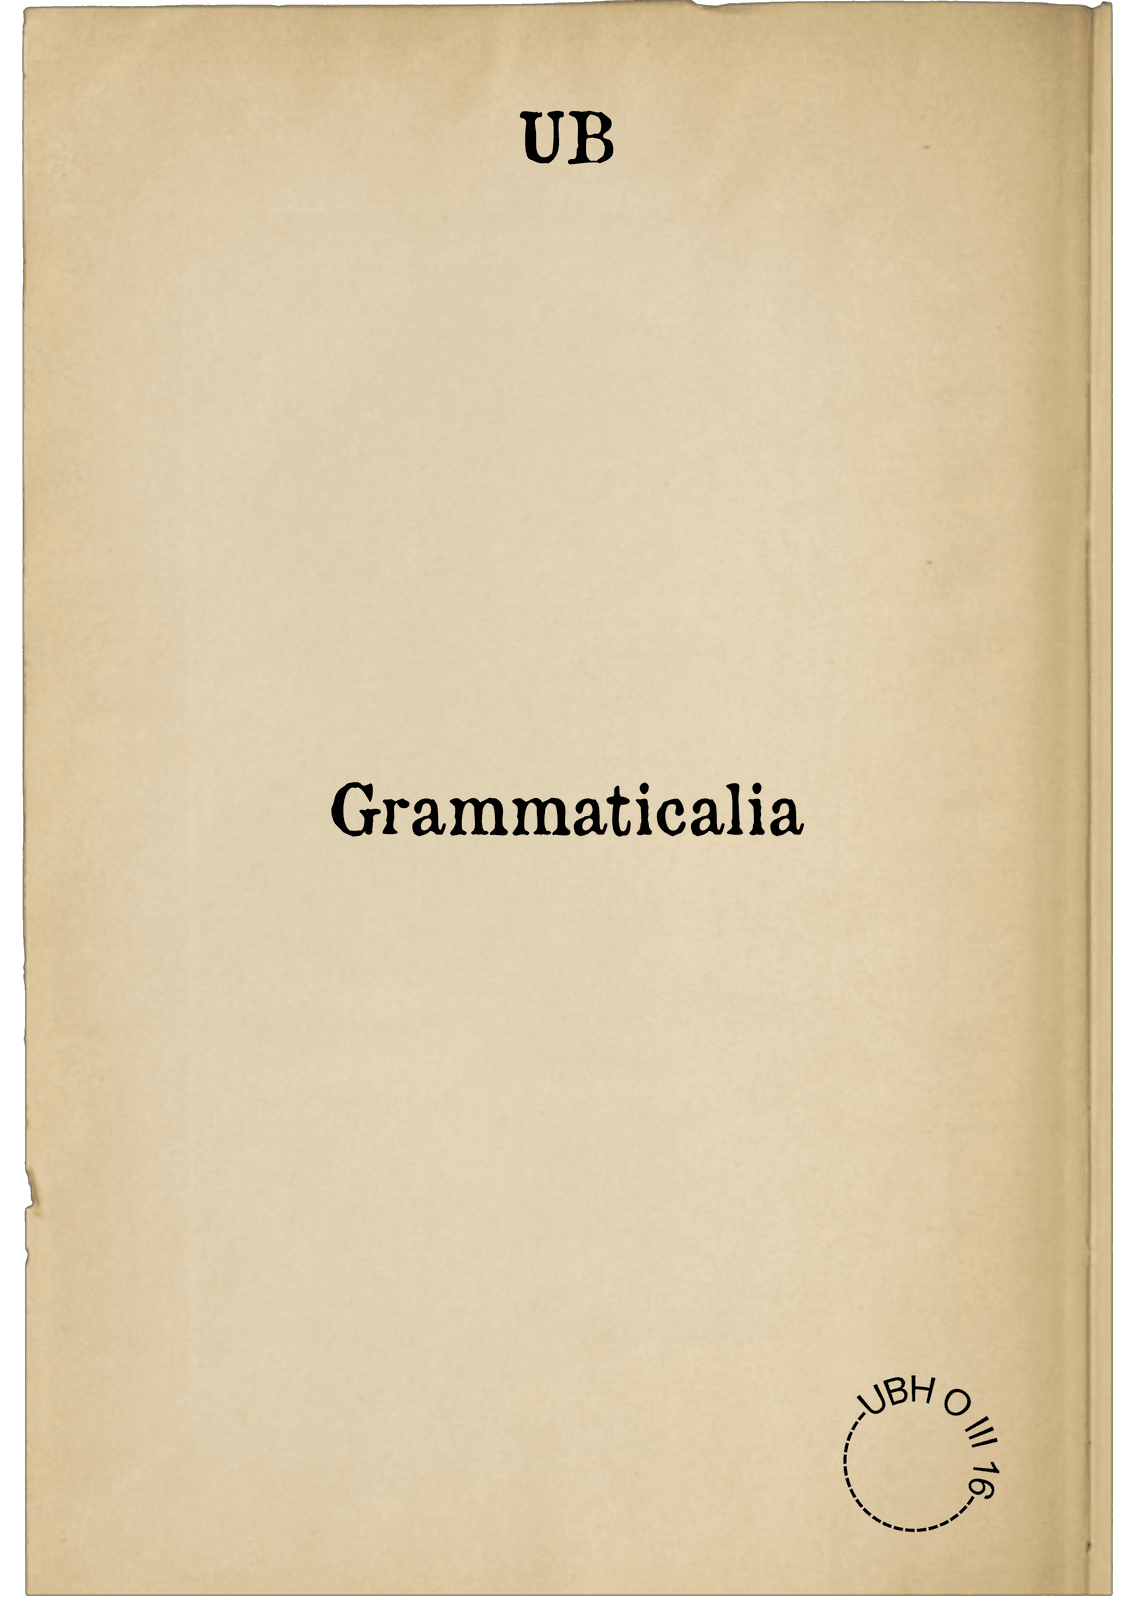 Grammaticalia